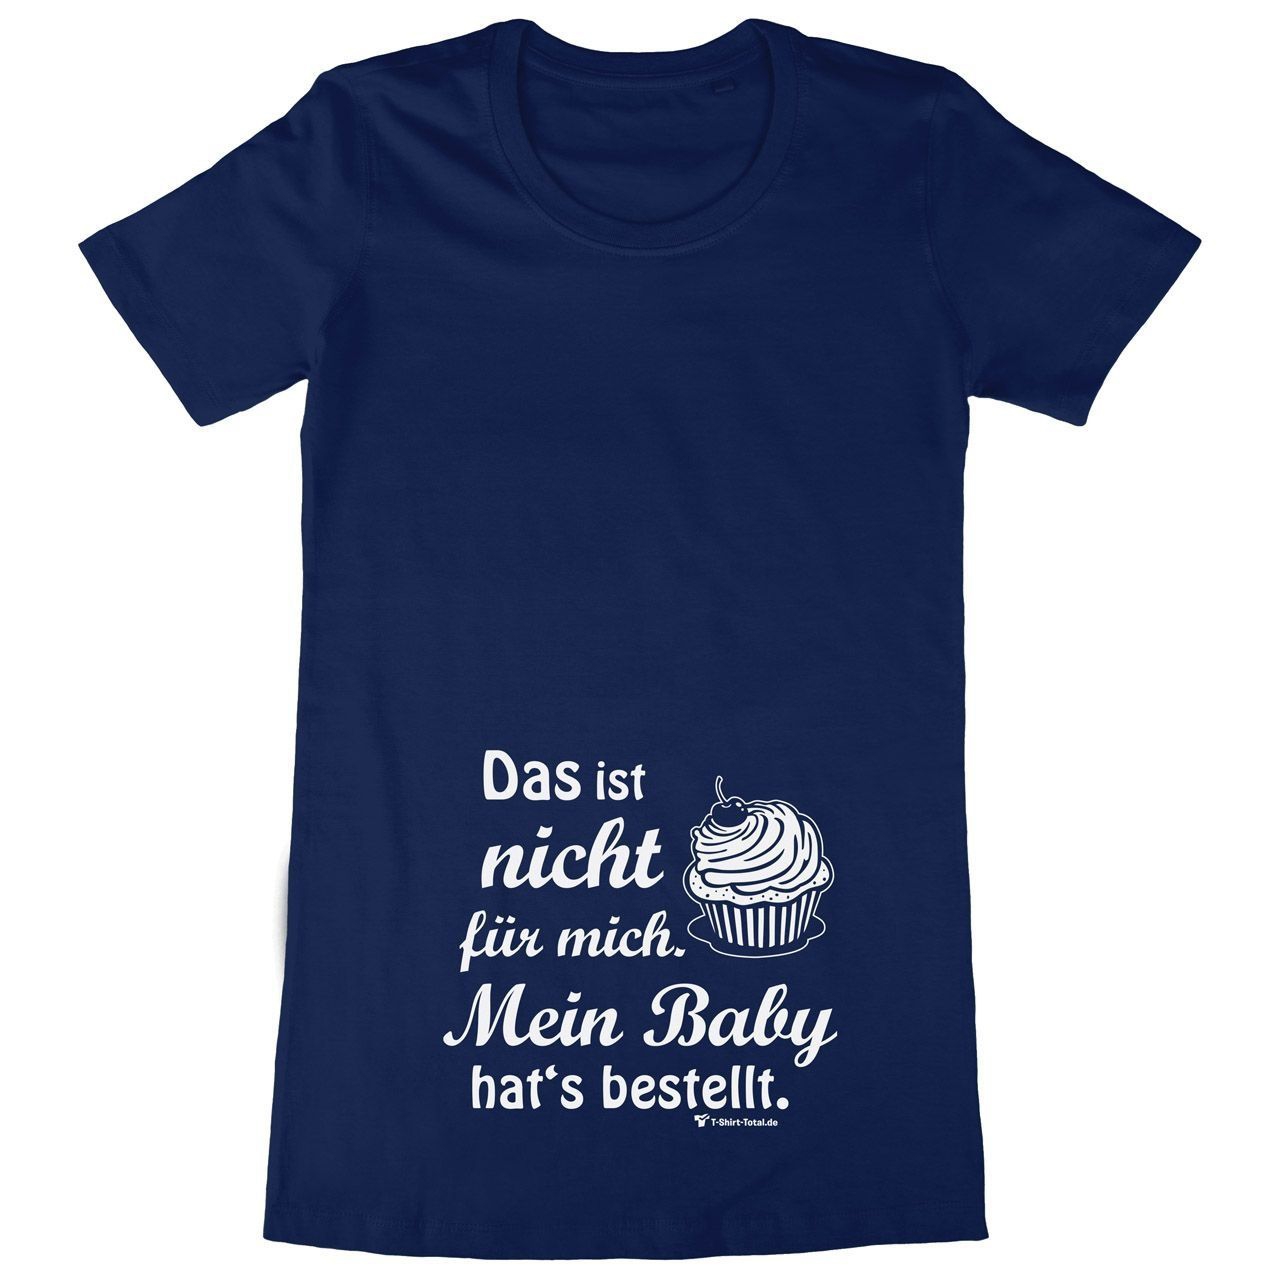 Baby hats bestellt Woman Long Shirt navy 2-Extra Large